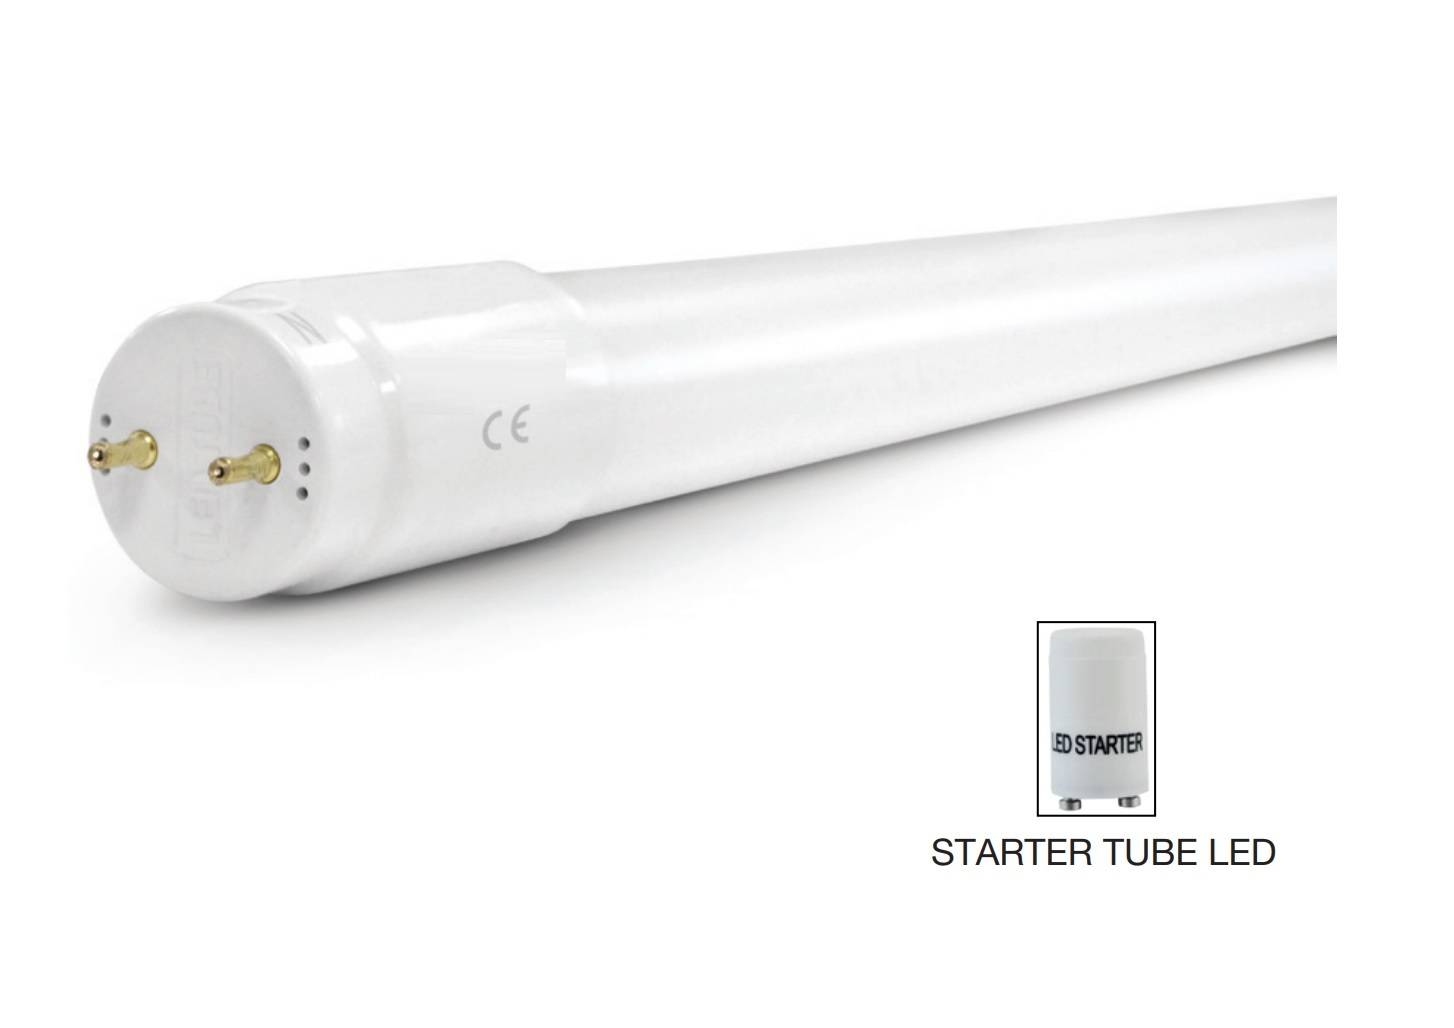 Tube neon led T8 60cm blanc chaud 3000k 10W avec starter